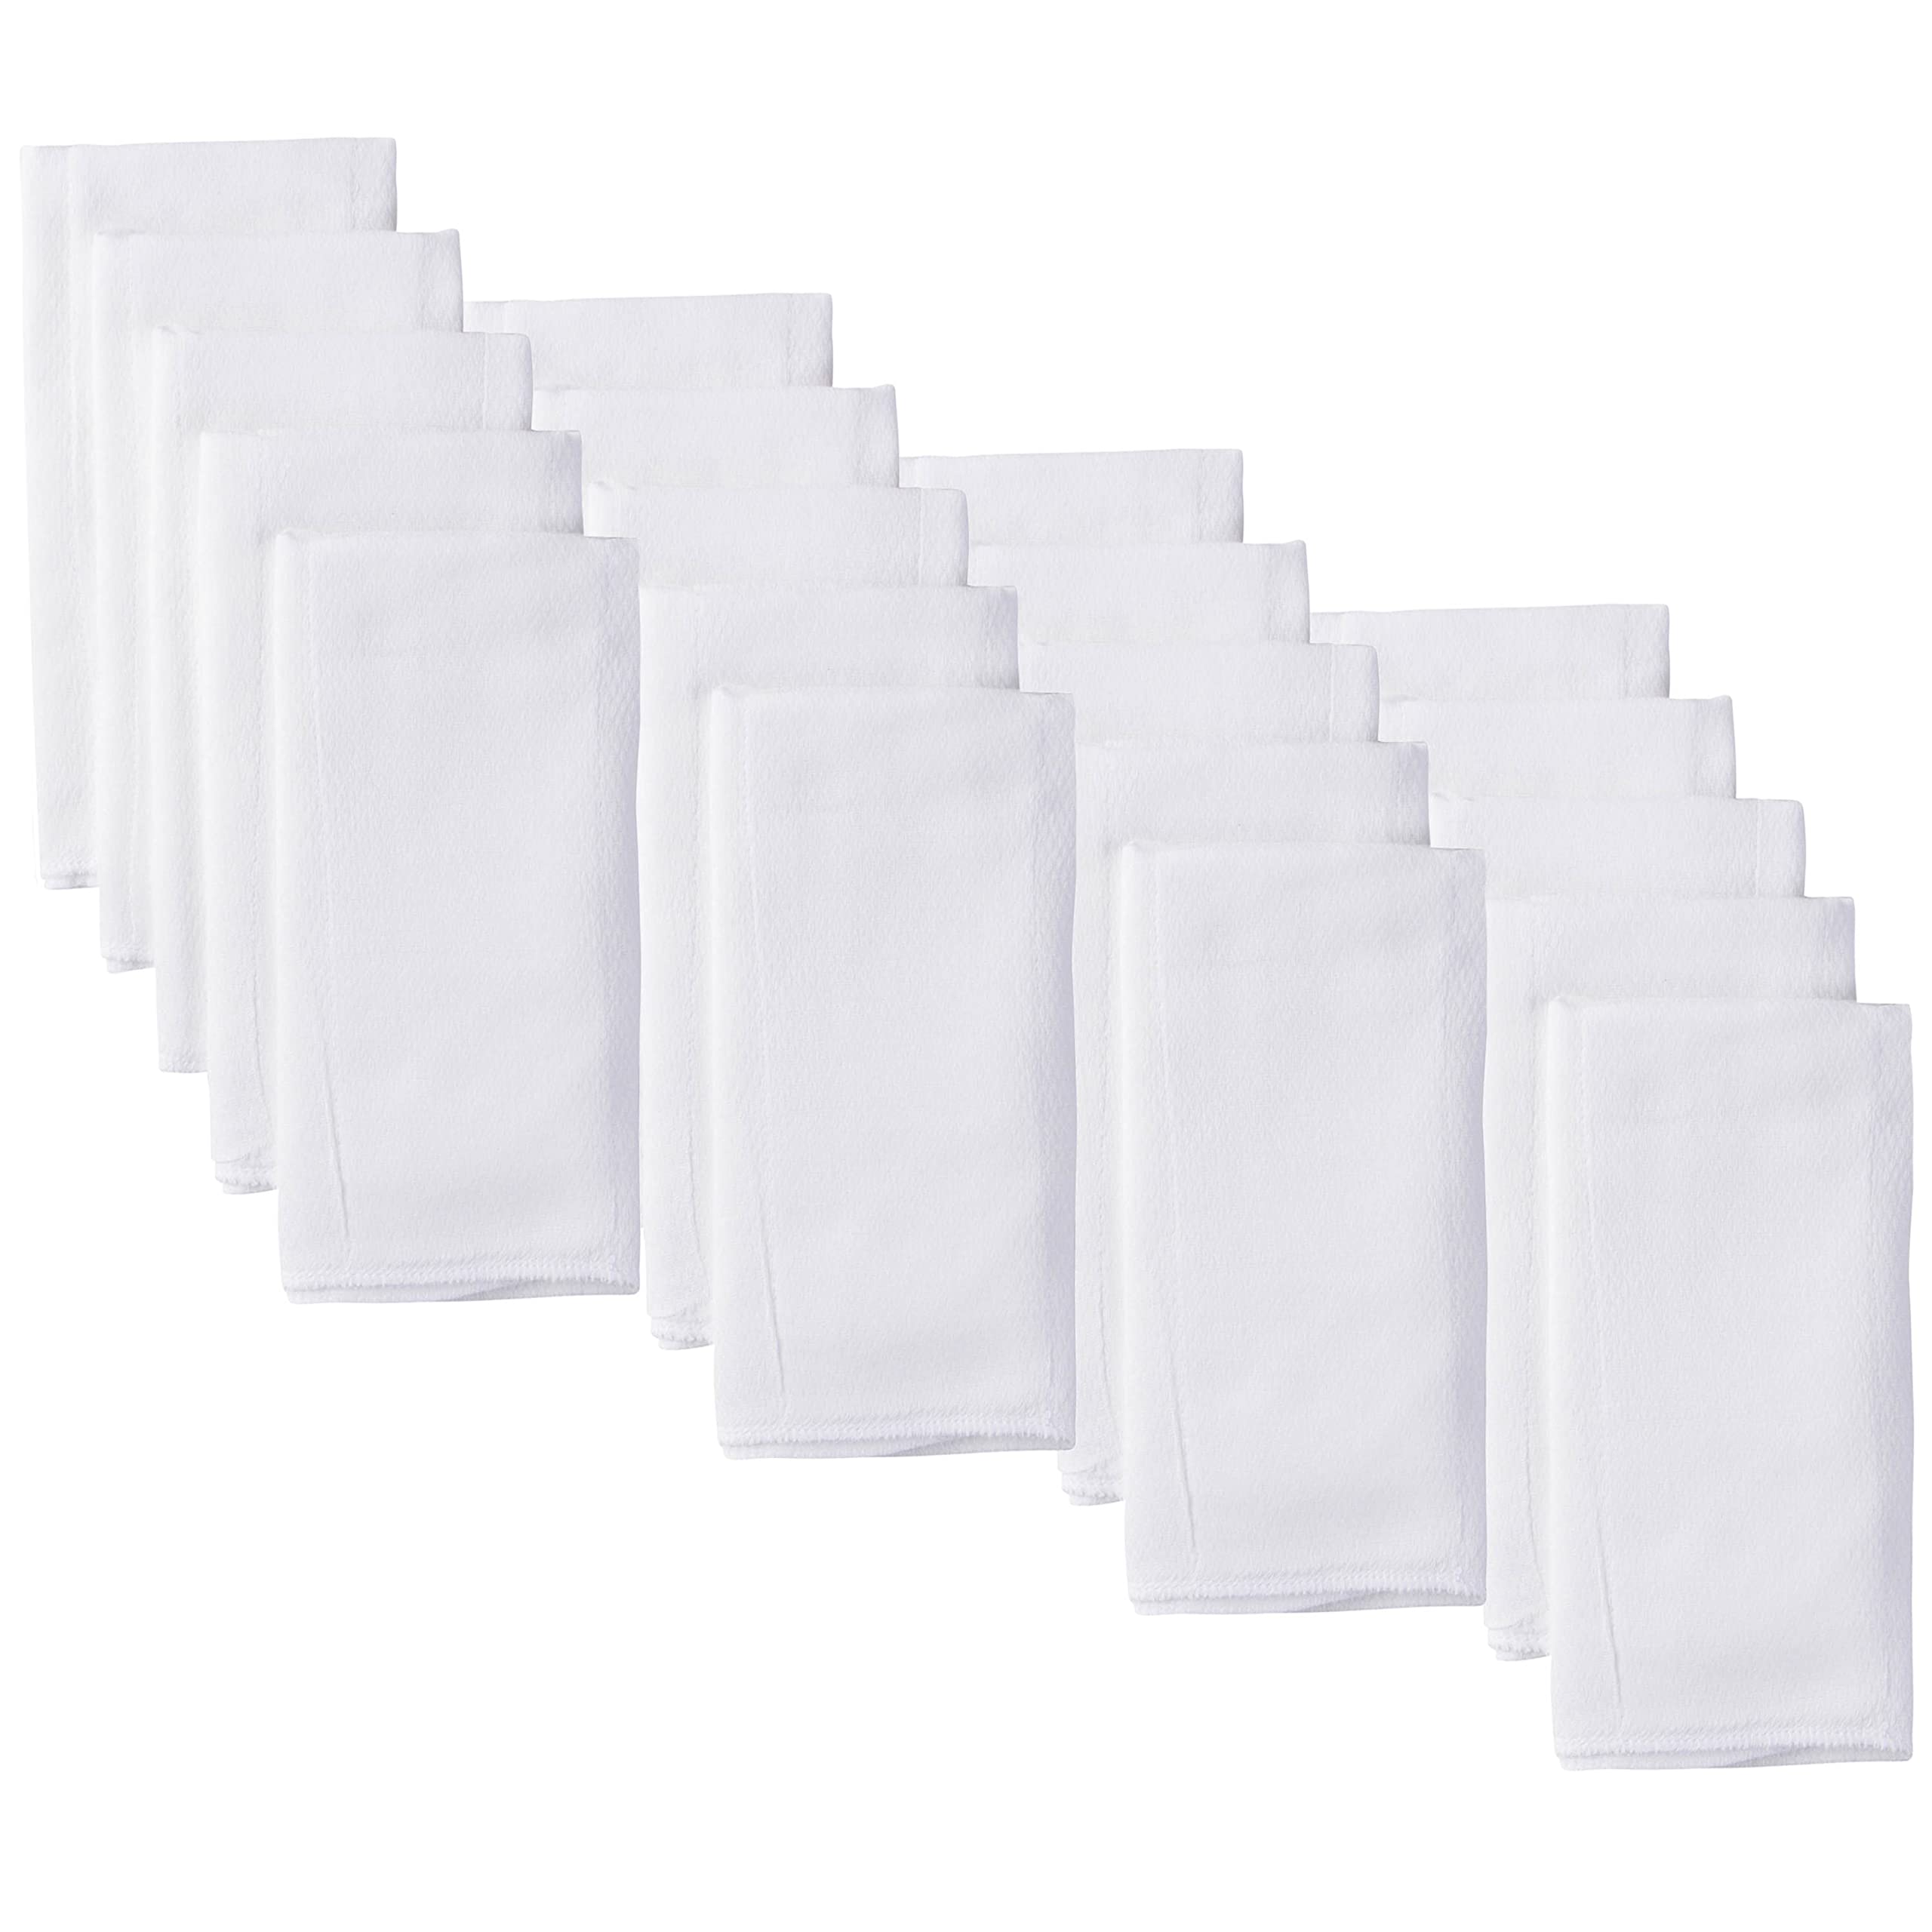 GERBER Unisex Baby Boys Girls Birdseye Prefold Cloth Diapers Multipack White 3-Ply 20 Pack